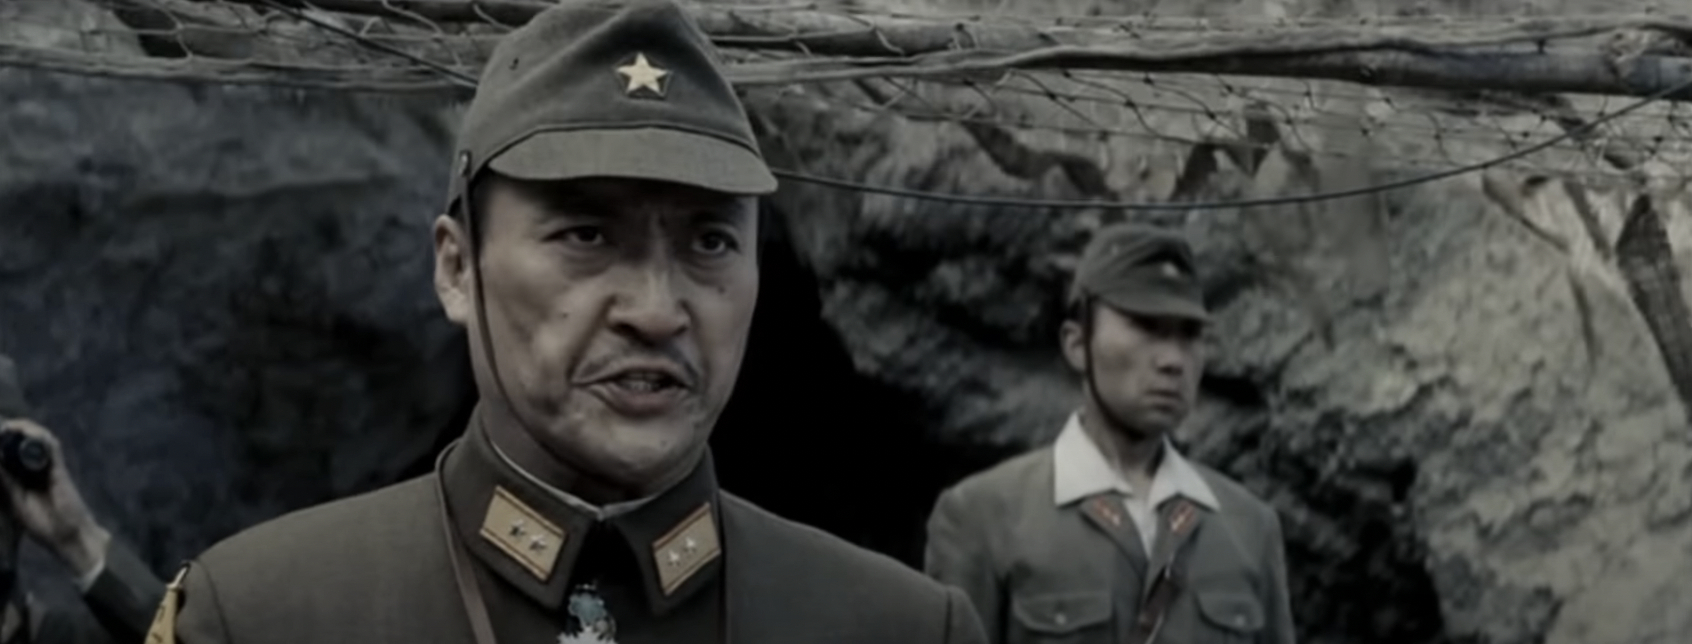 Ken Watanabe as a Japanese soldier